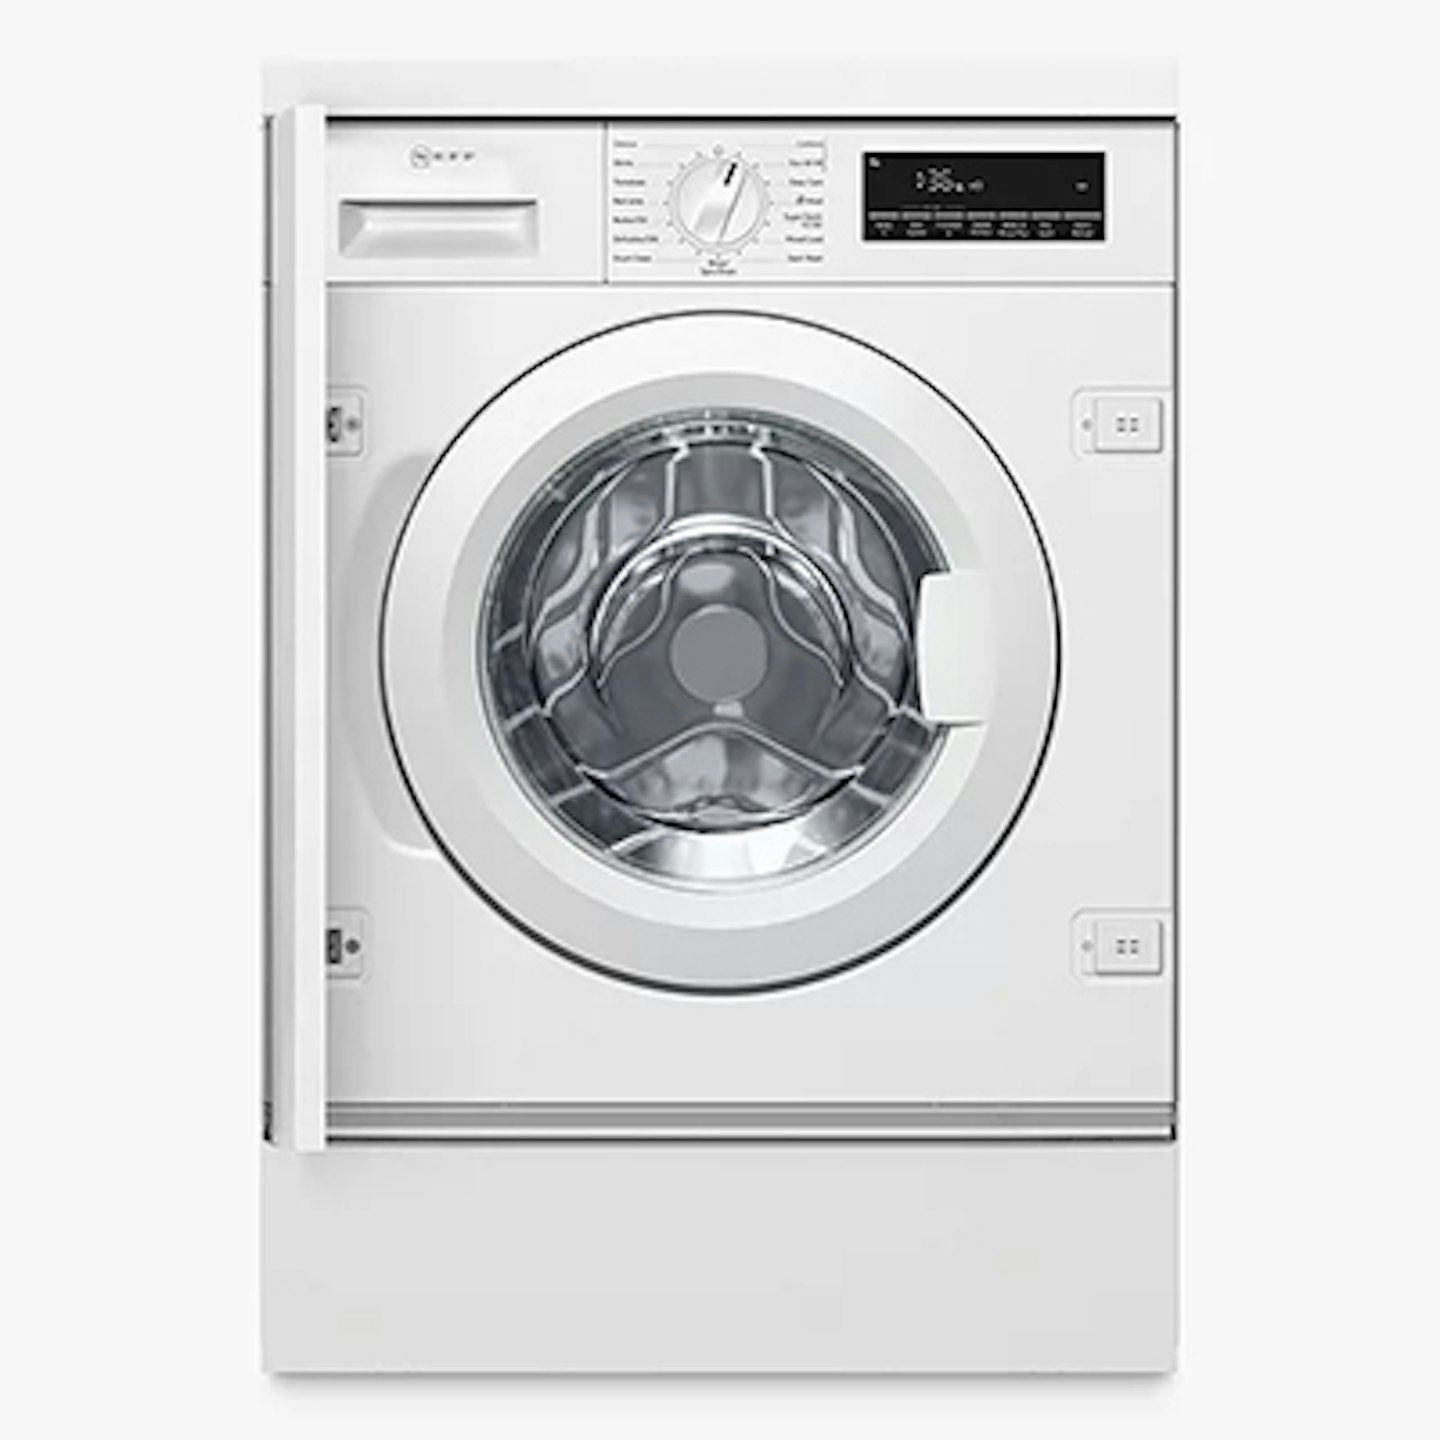 Neff integrated washing machine